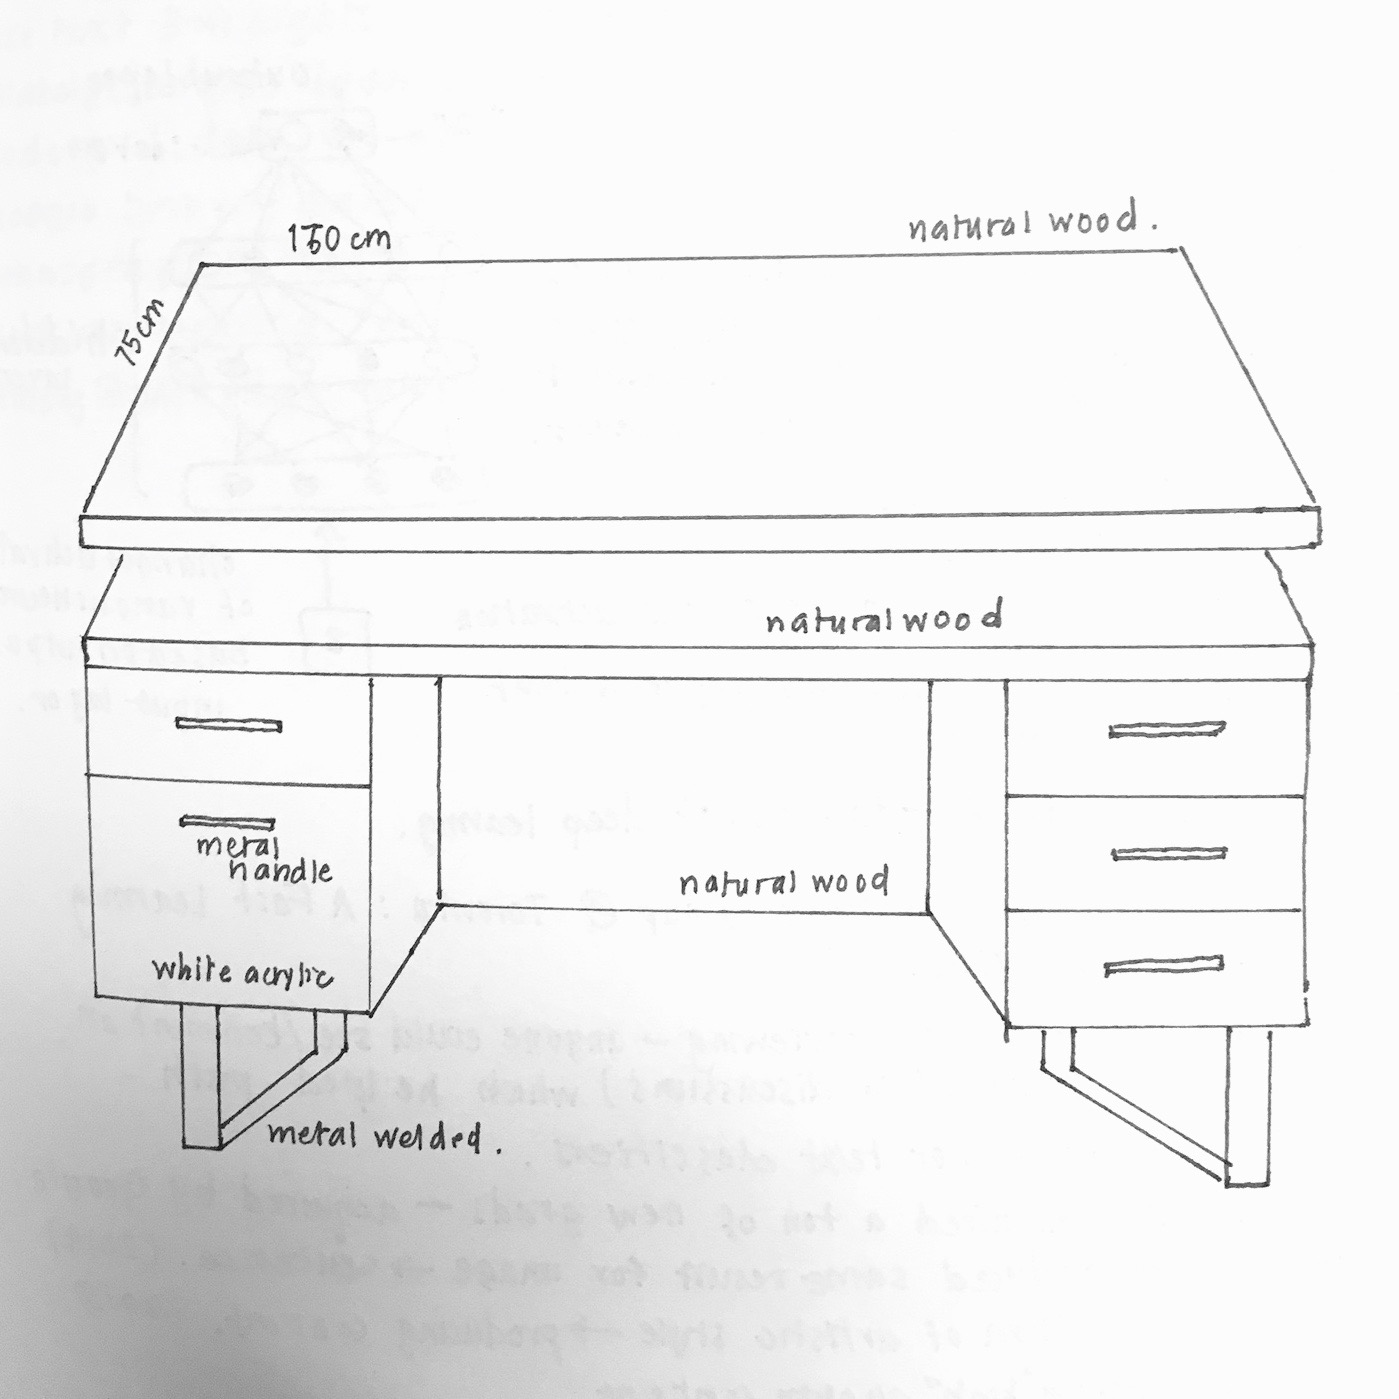 sketch of desk materials